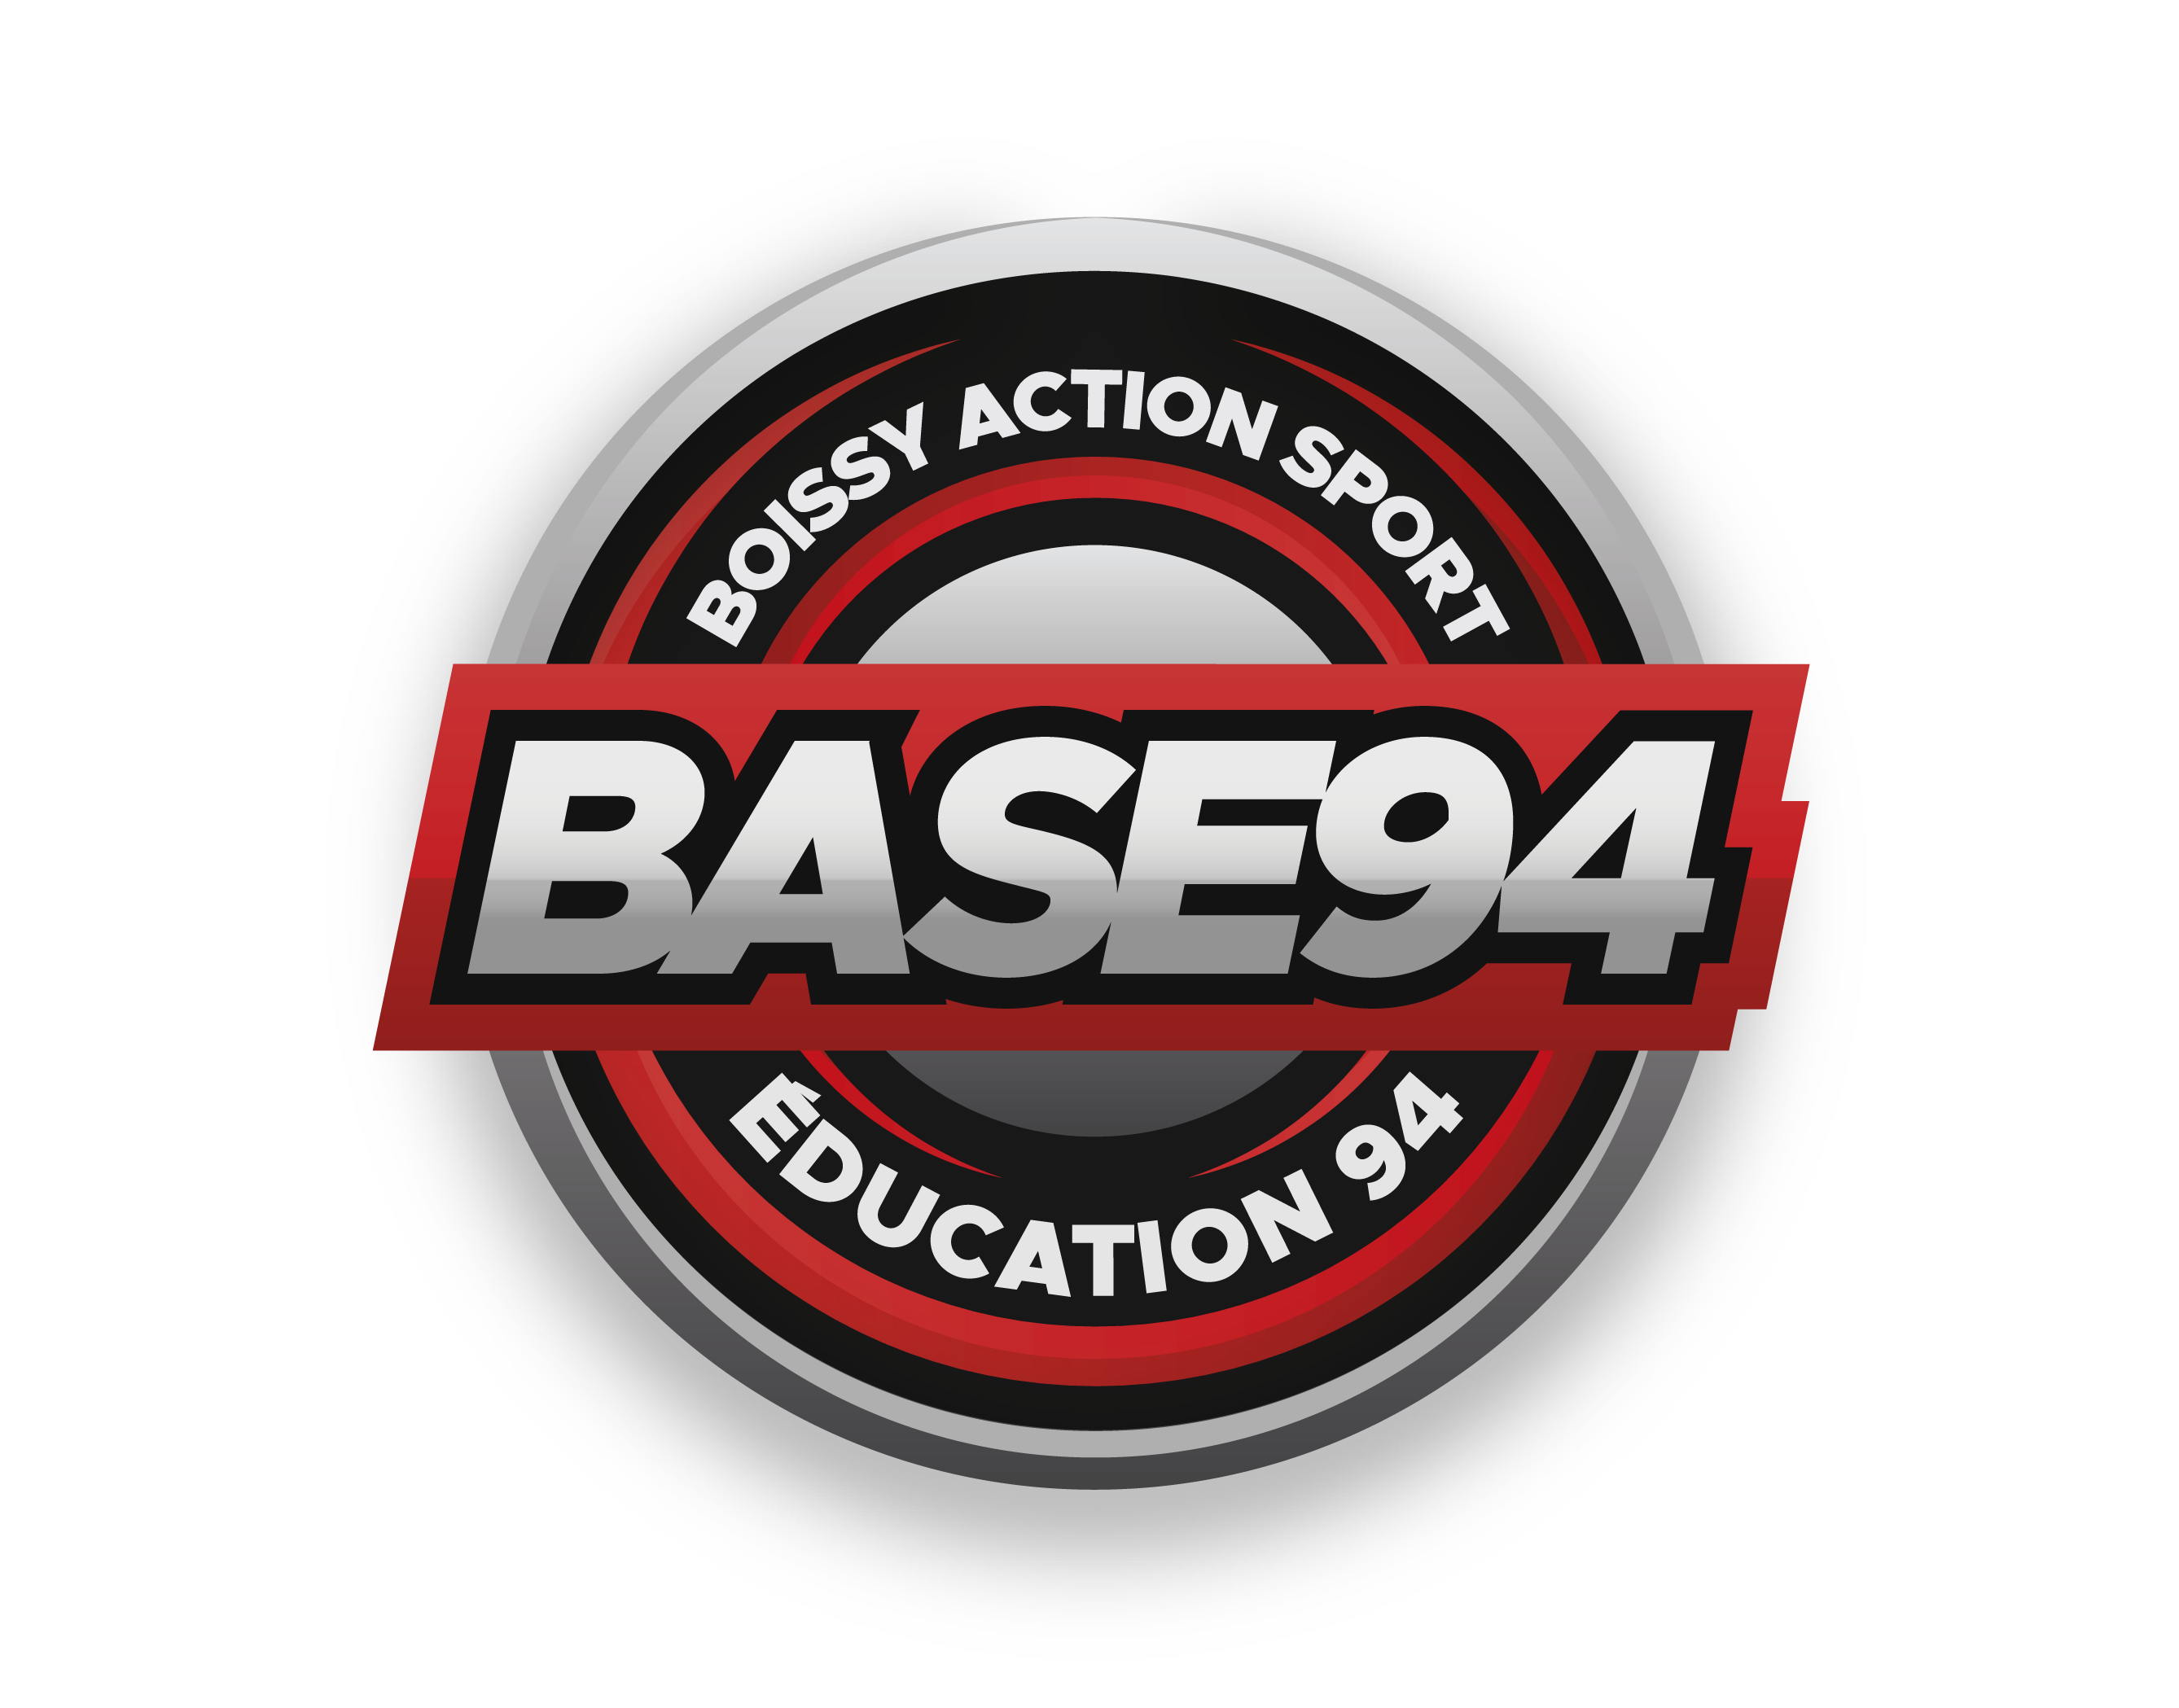 Logo club BOISSY ACTION SPORT EDUCATION 94 "BASE 94"